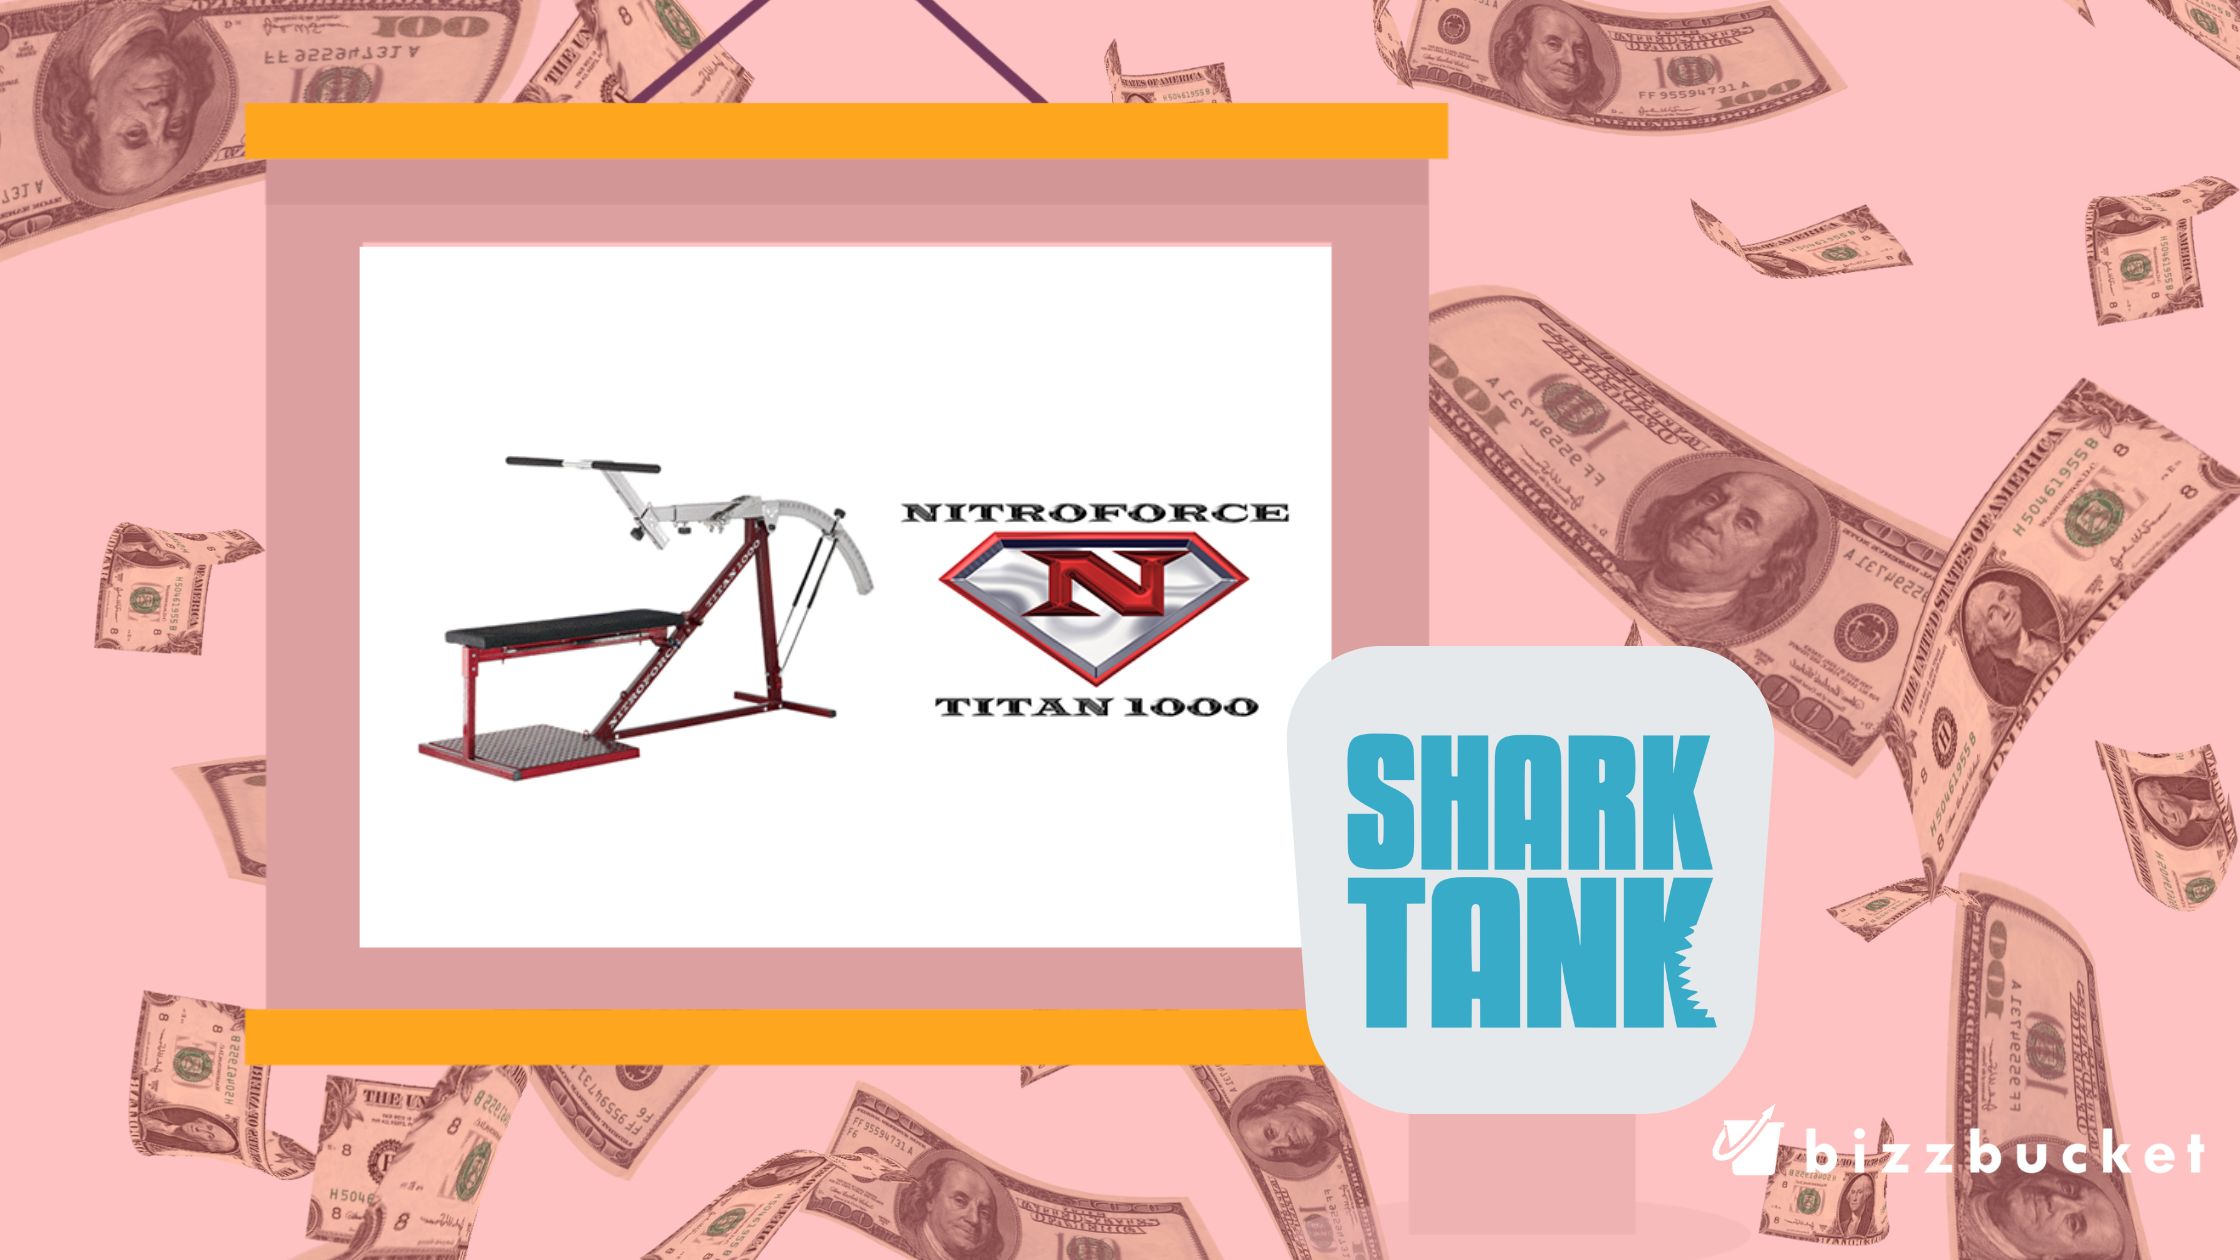 Nitroforce shark tank update